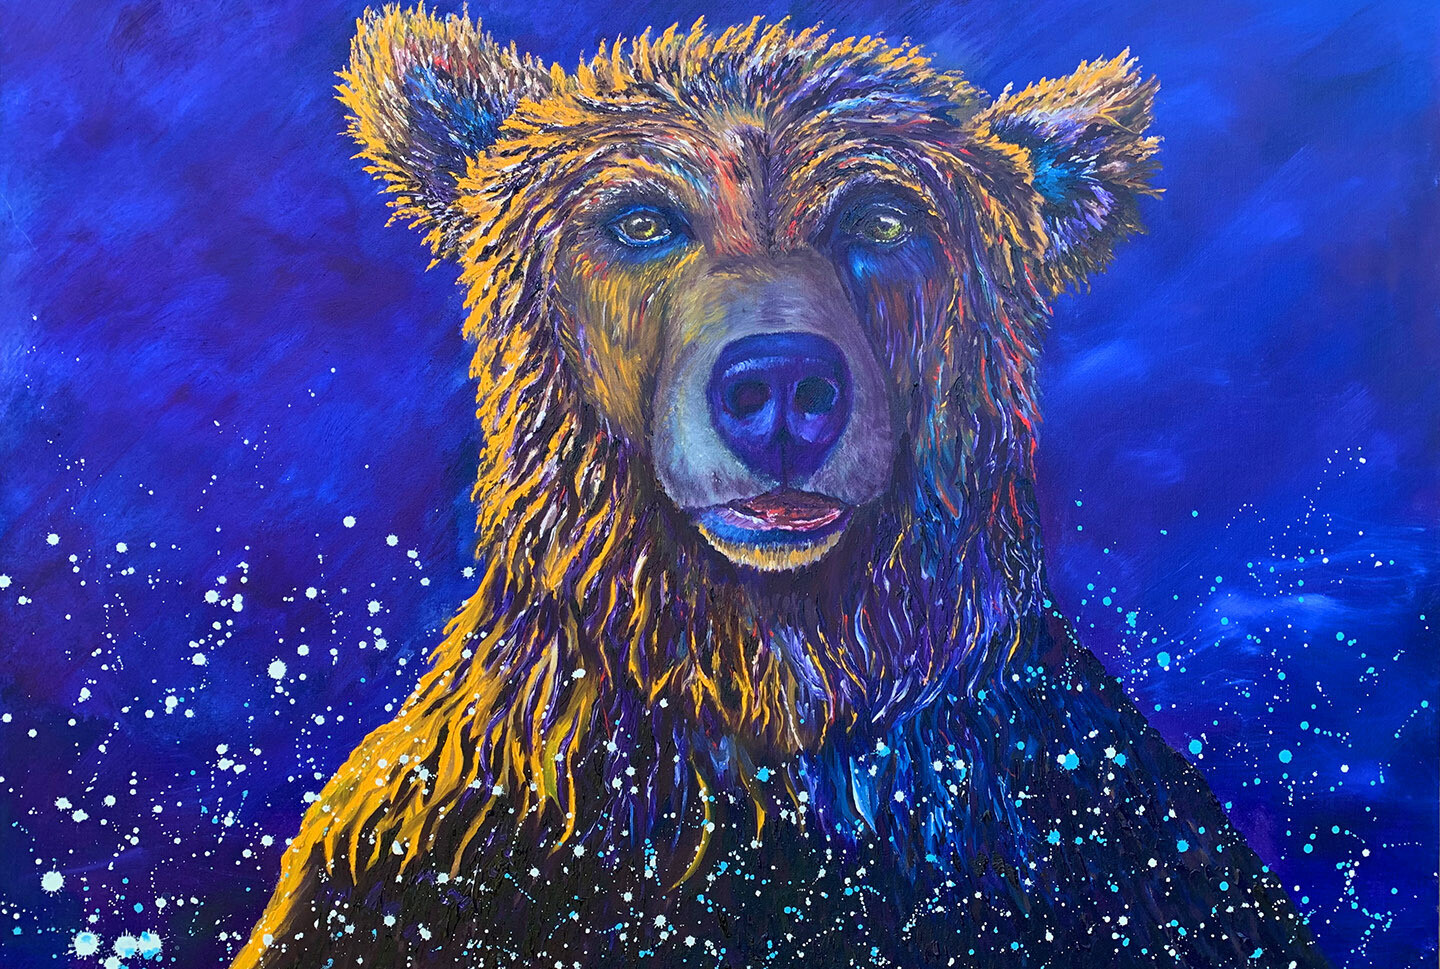 "Teddy" Grizzly Bear